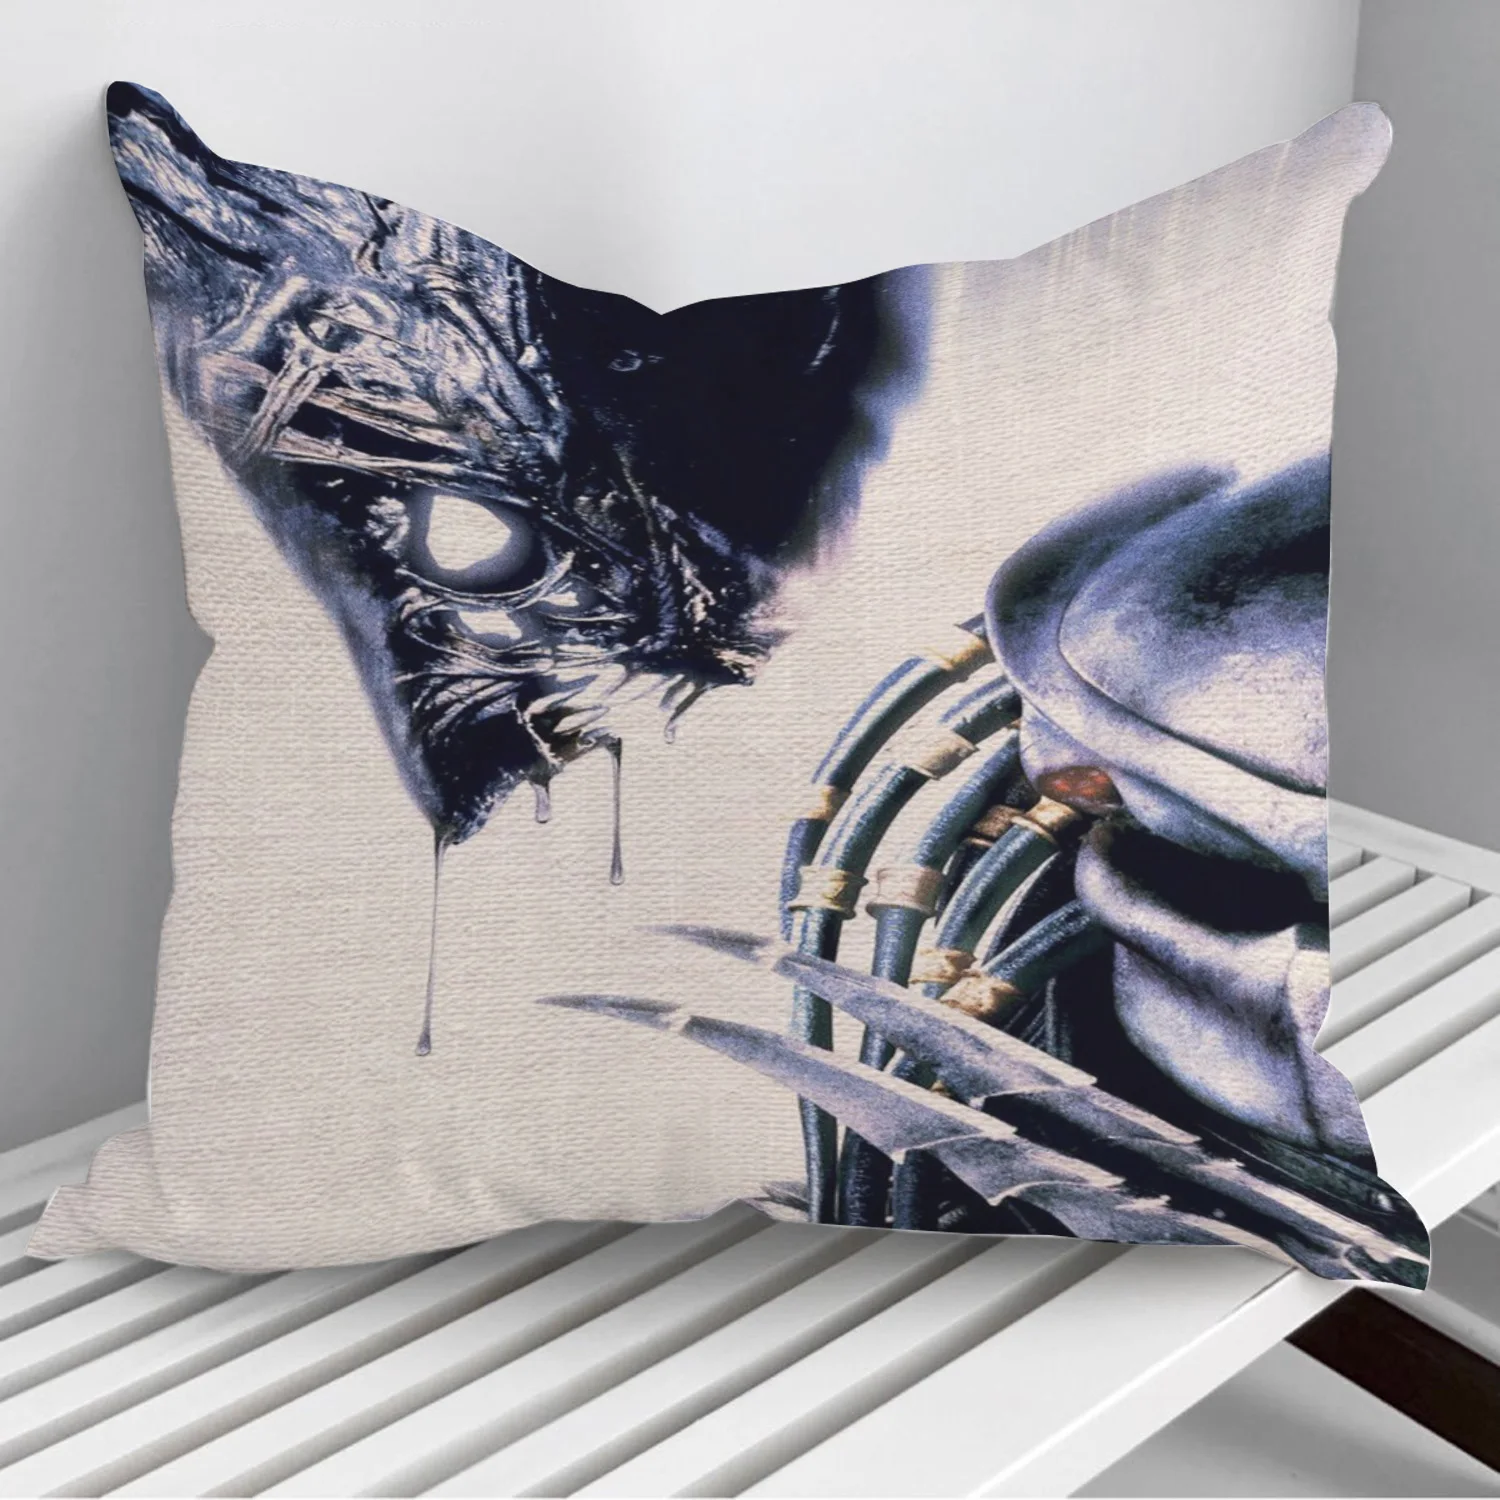 

Alien vs Predator Throw Pillows Cushion Cover On Sofa Home Decor 45*45cm 40*40cm Gift Pillowcase Cojines Dropshipping